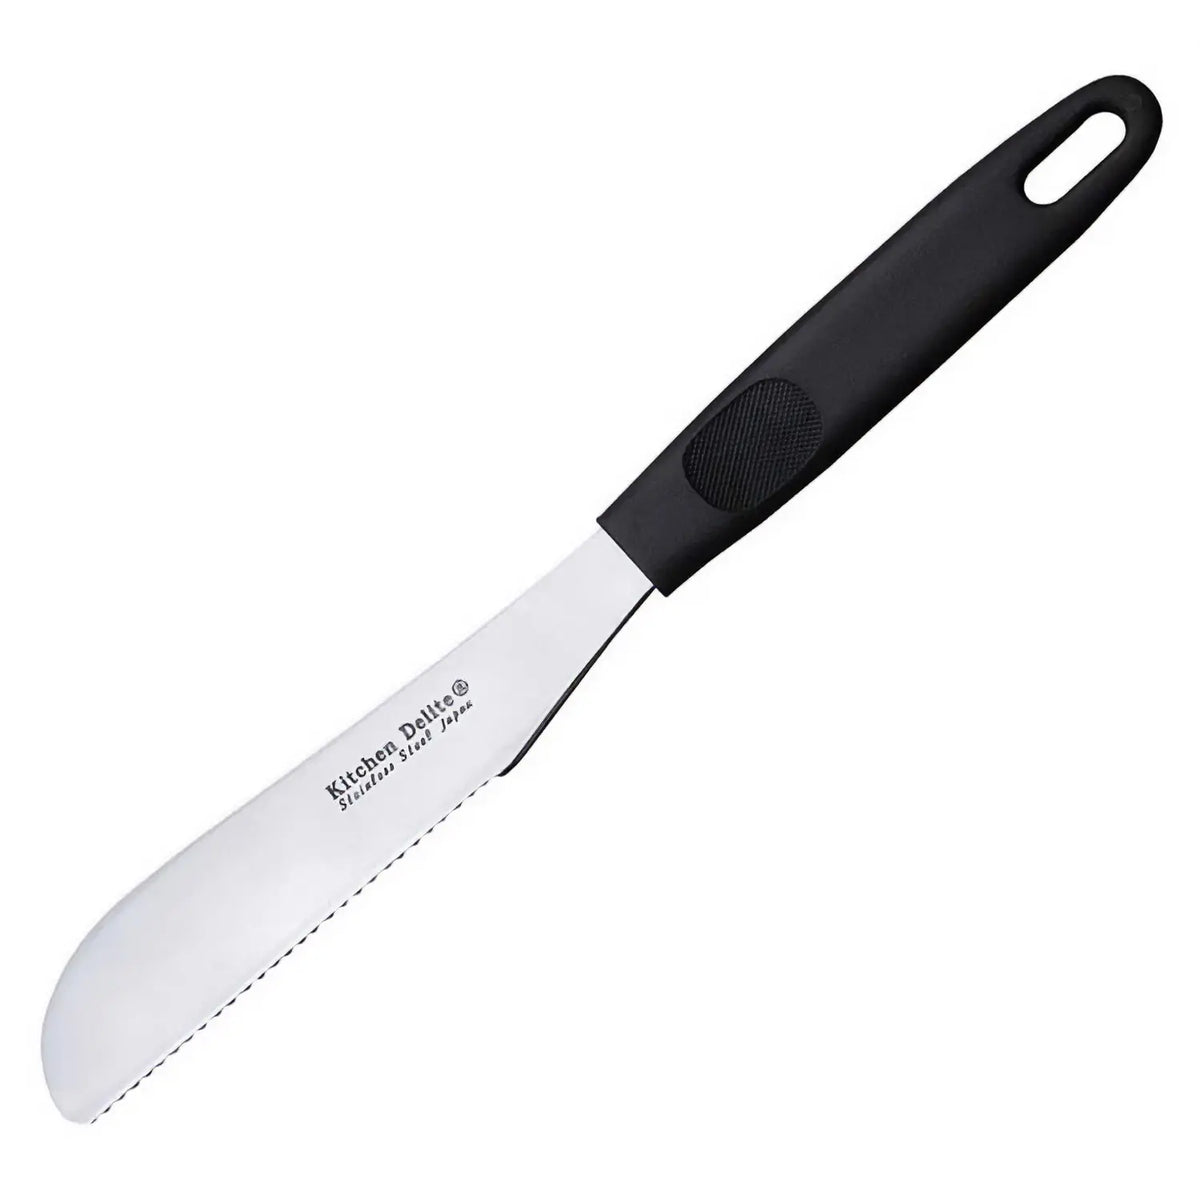 Kitasho Stainless Steel Pastry Knife